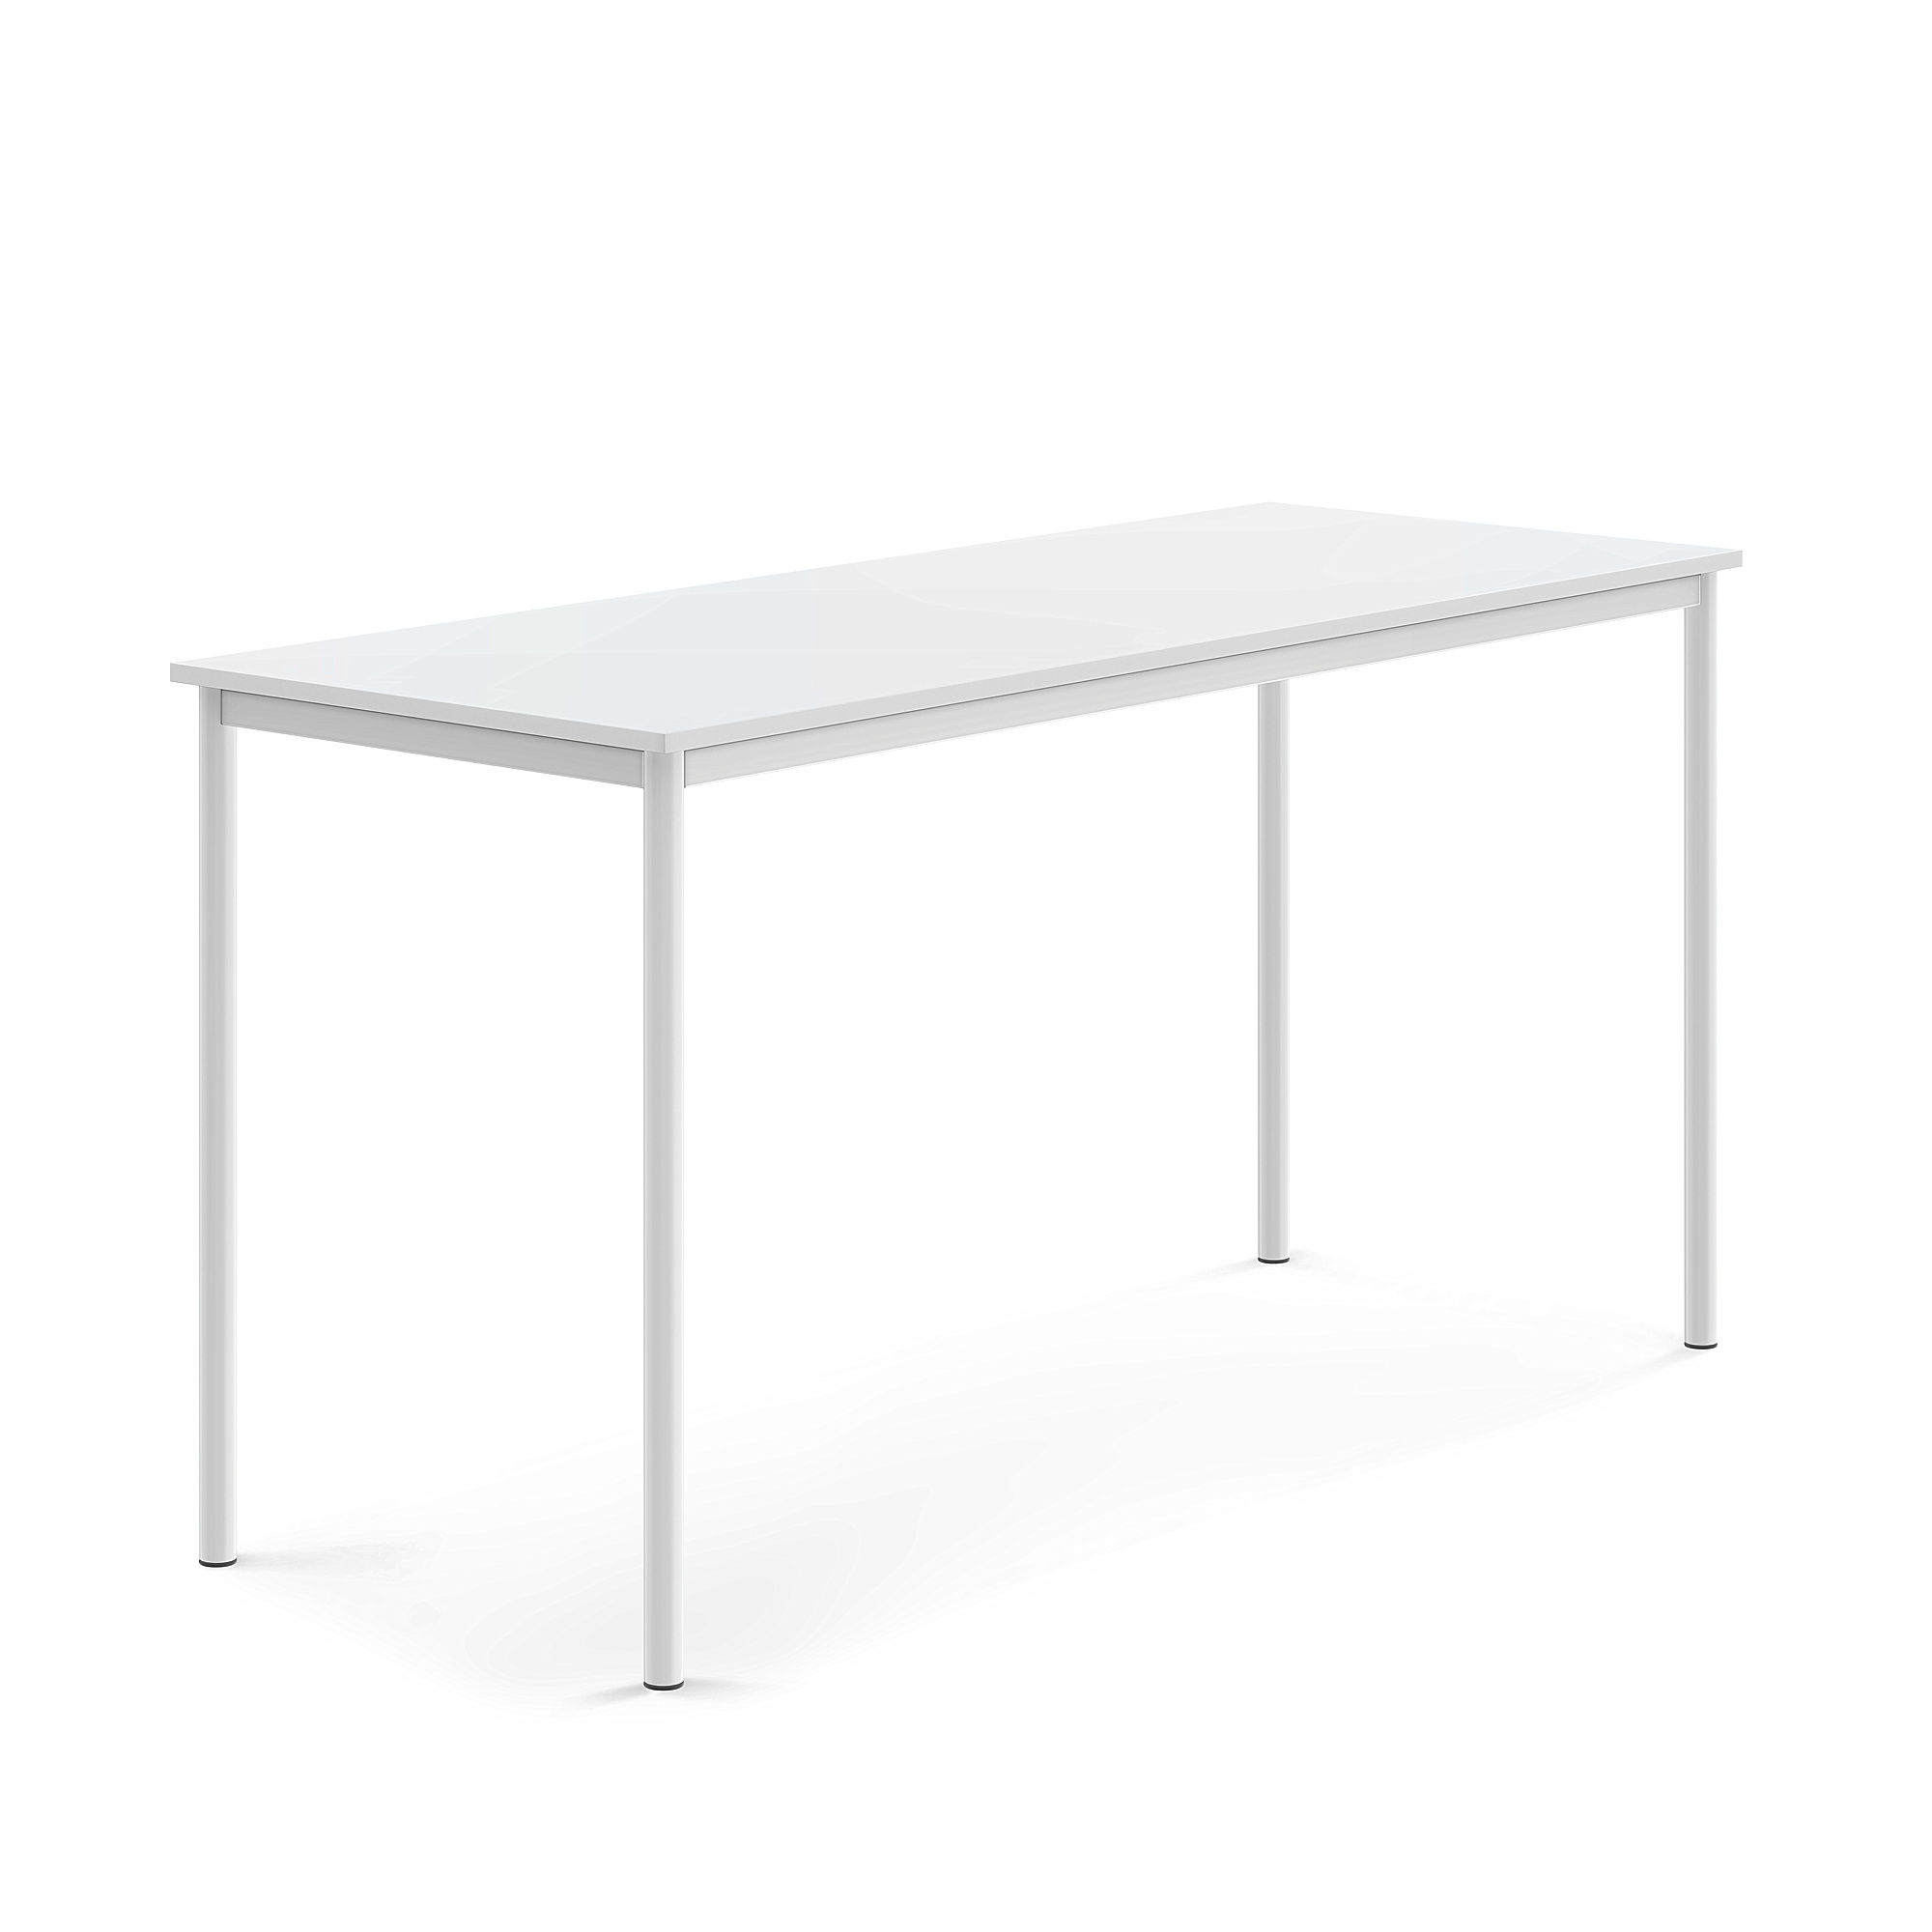 Stůl SONITUS, 1800x700x900 mm, bílé nohy, HPL deska tlumící hluk, bílá